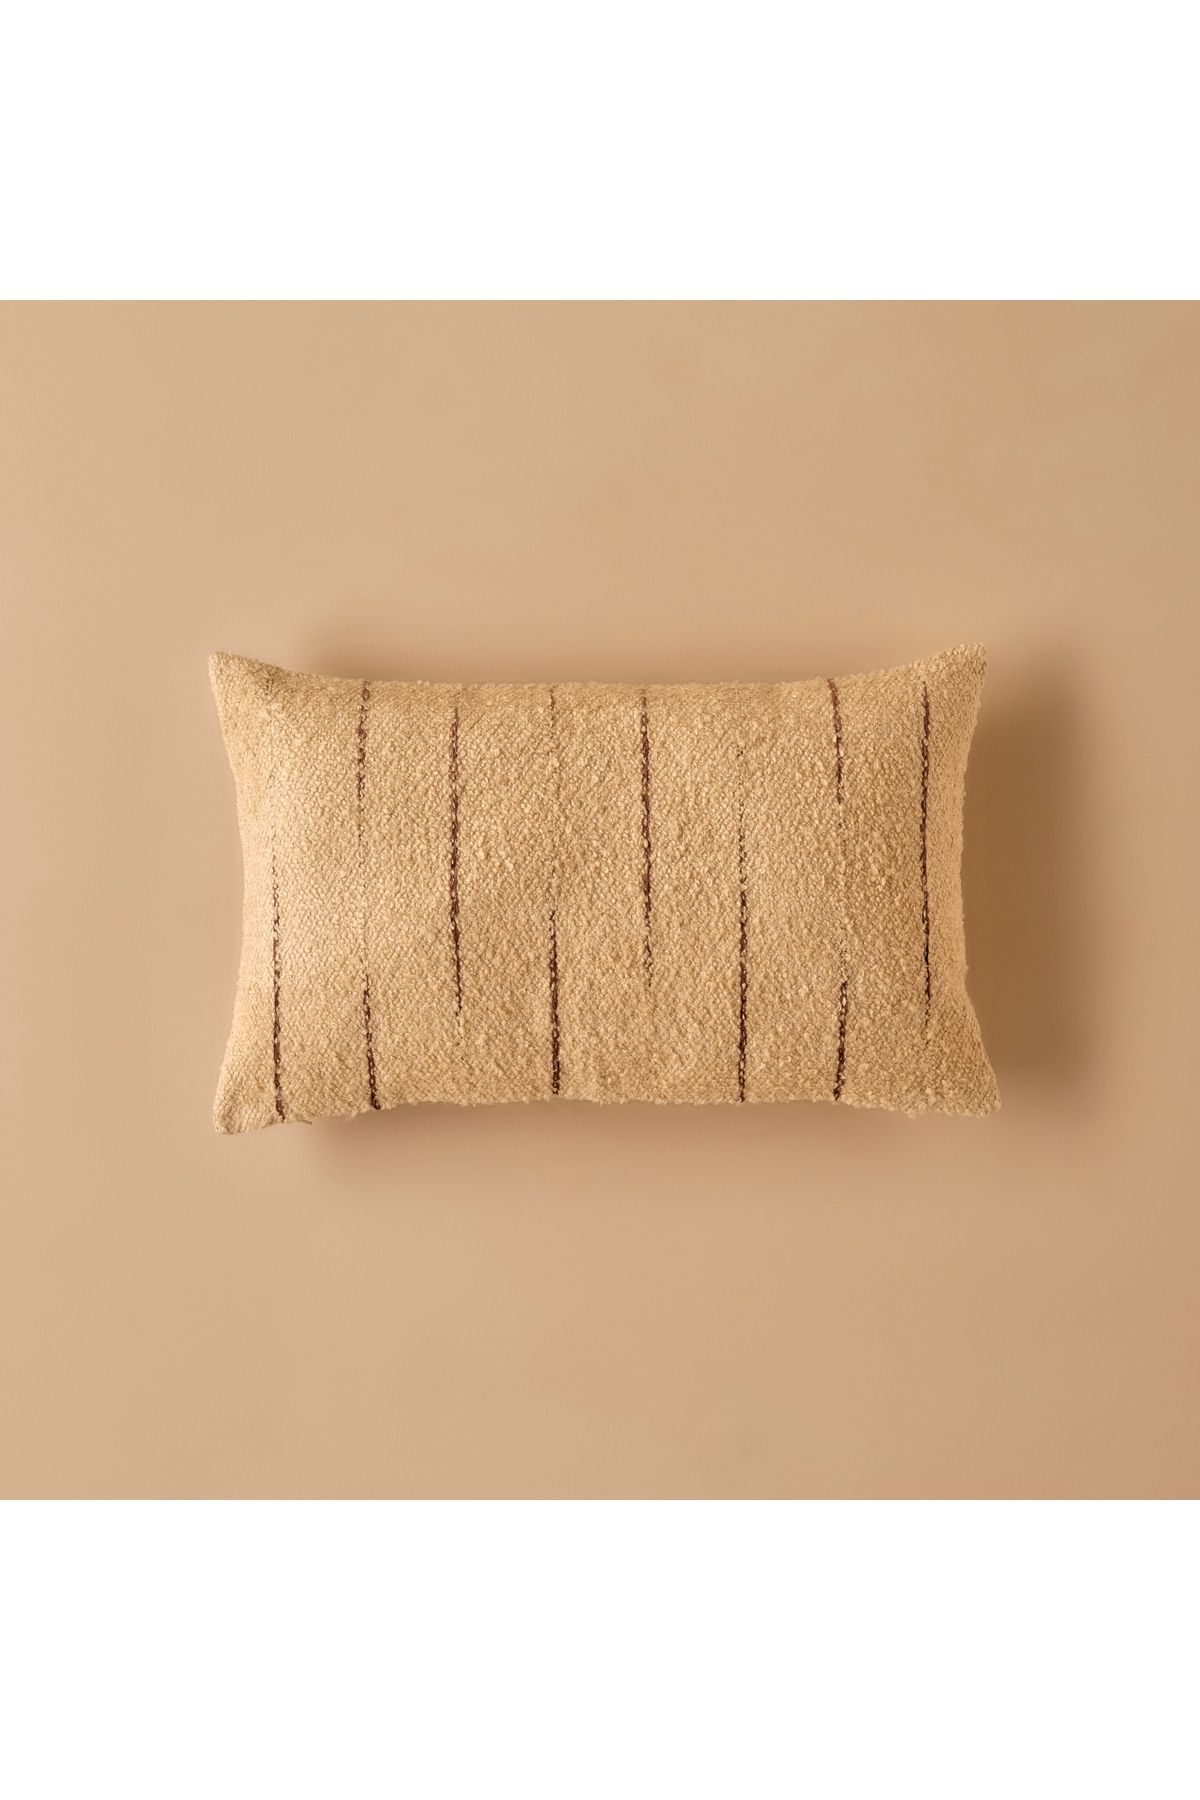 Bella Maison Wool Kırlent Kılıfı Bej (35x50 cm)